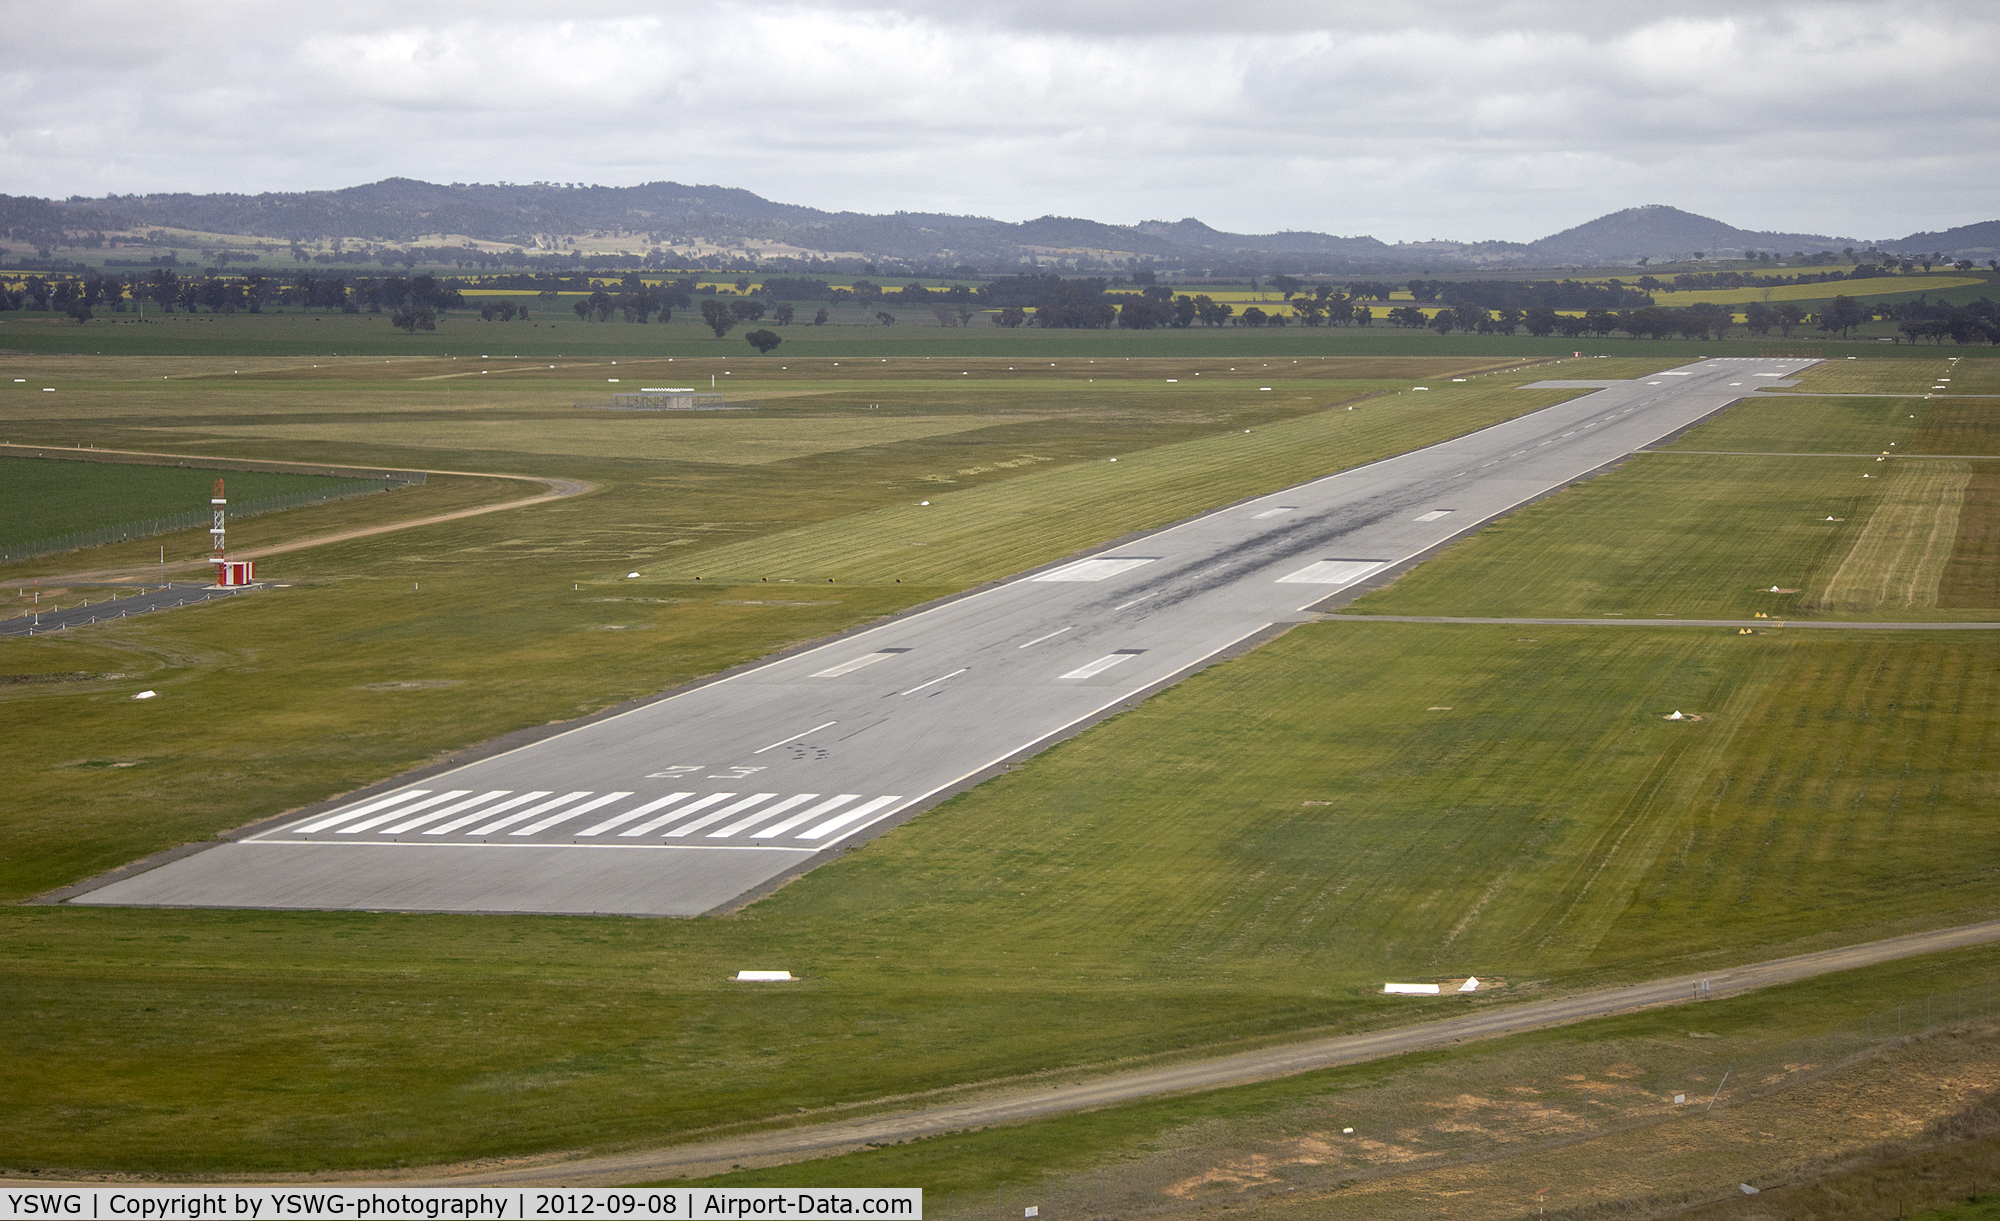 Wagga Wagga Airport, Wagga Wagga, New South Wales Australia (YSWG) - Runway 05/23 at Wagga Wagga Airport.